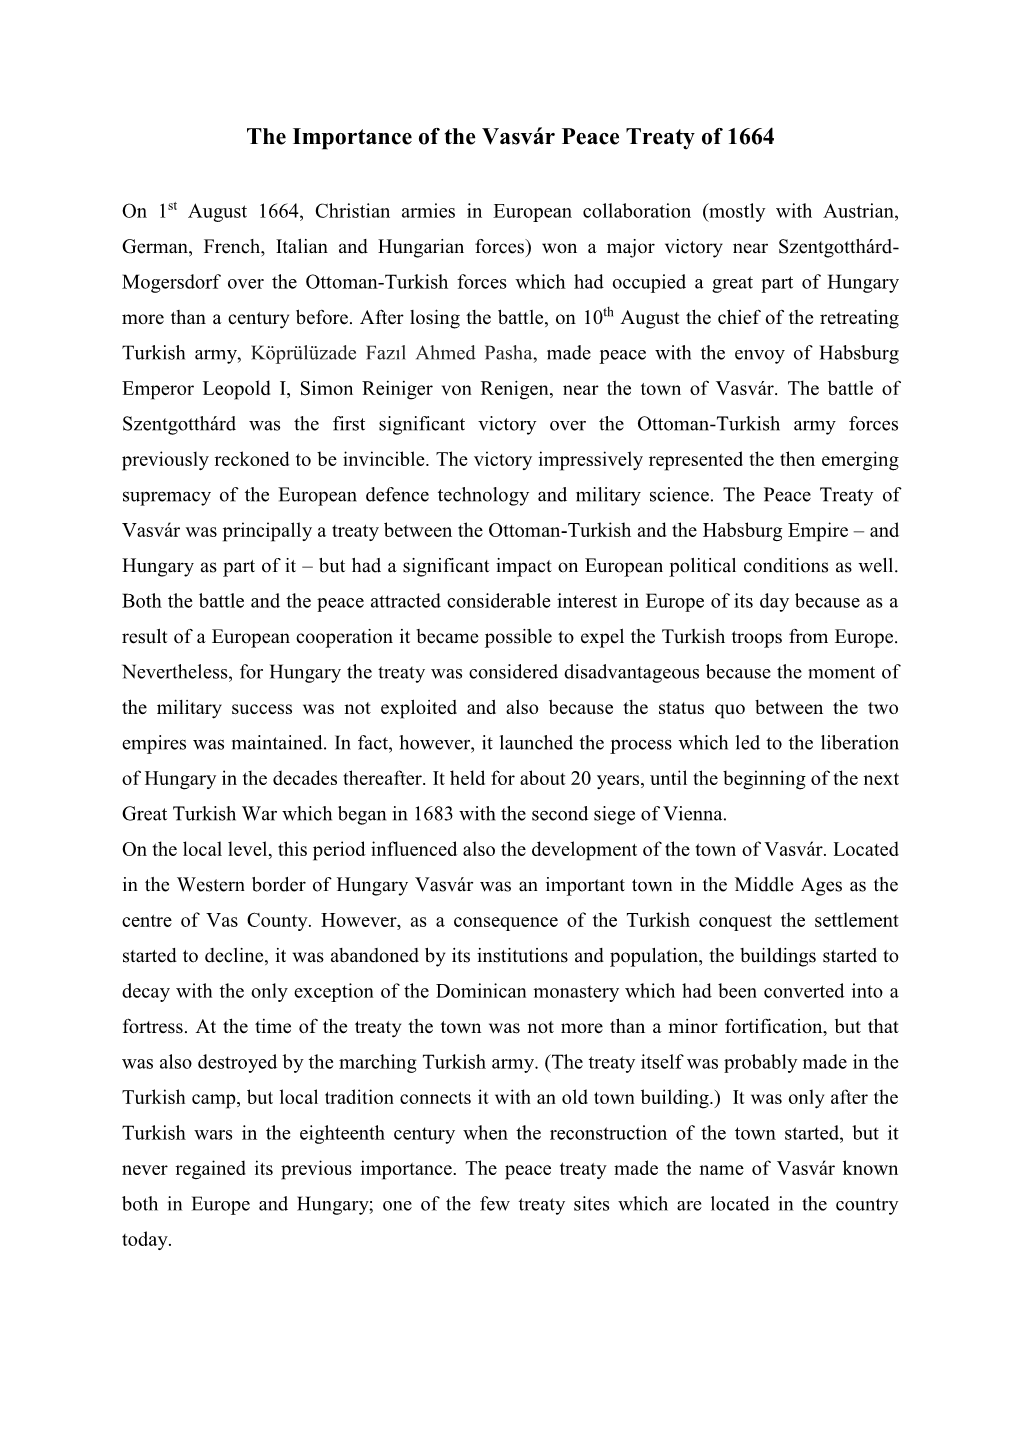 The Importance of the Vasvár Peace Treaty of 1664